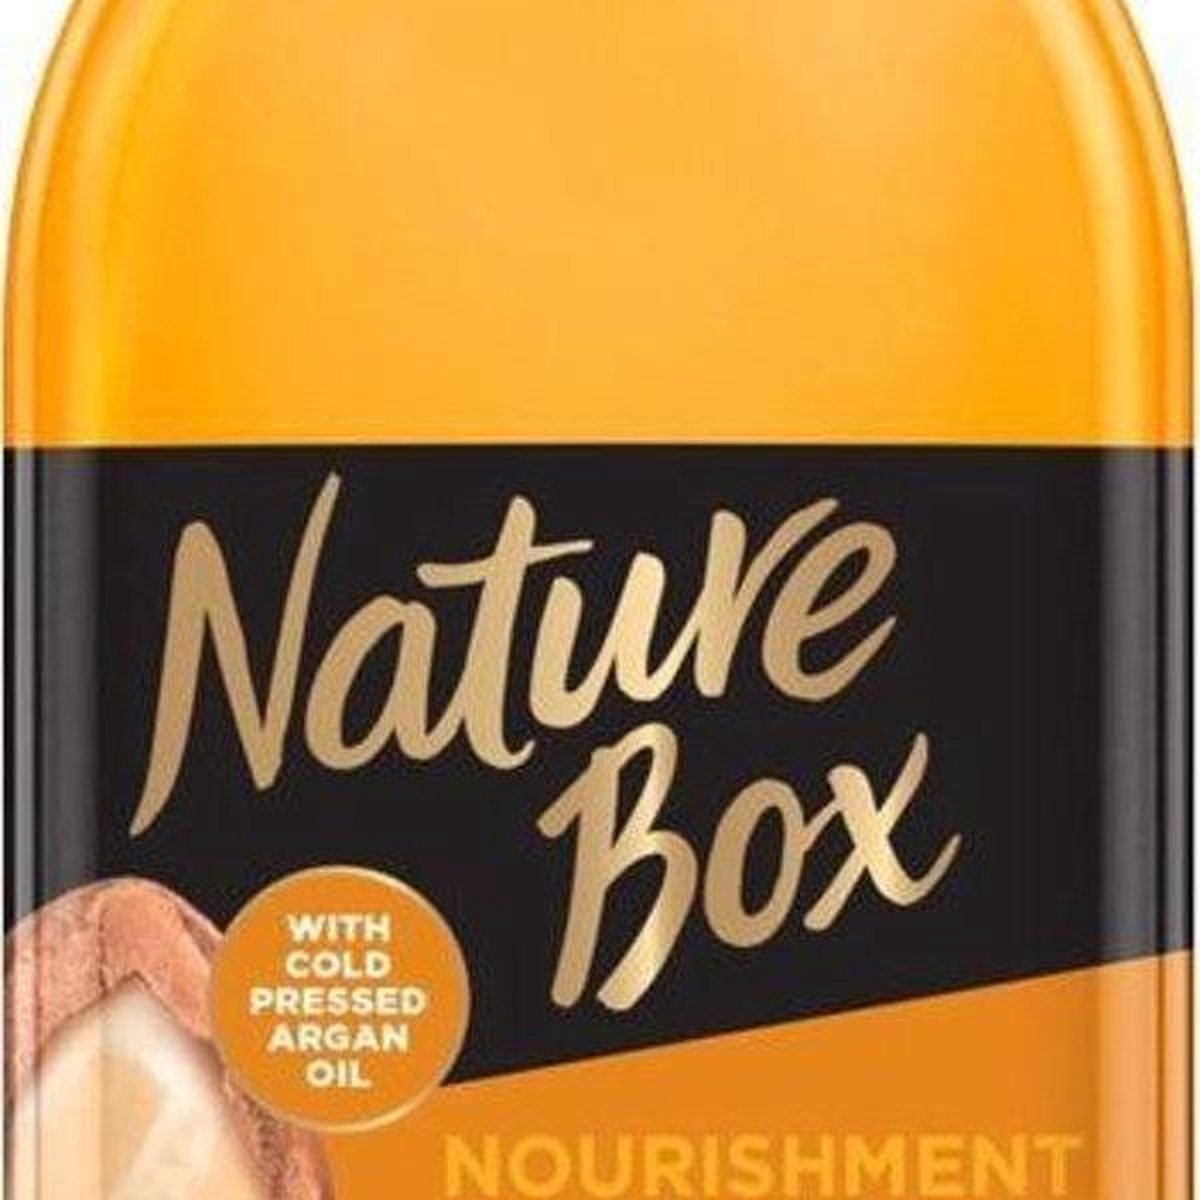 Nature Box - Argan Oil Nourishment Conditioner 385ml